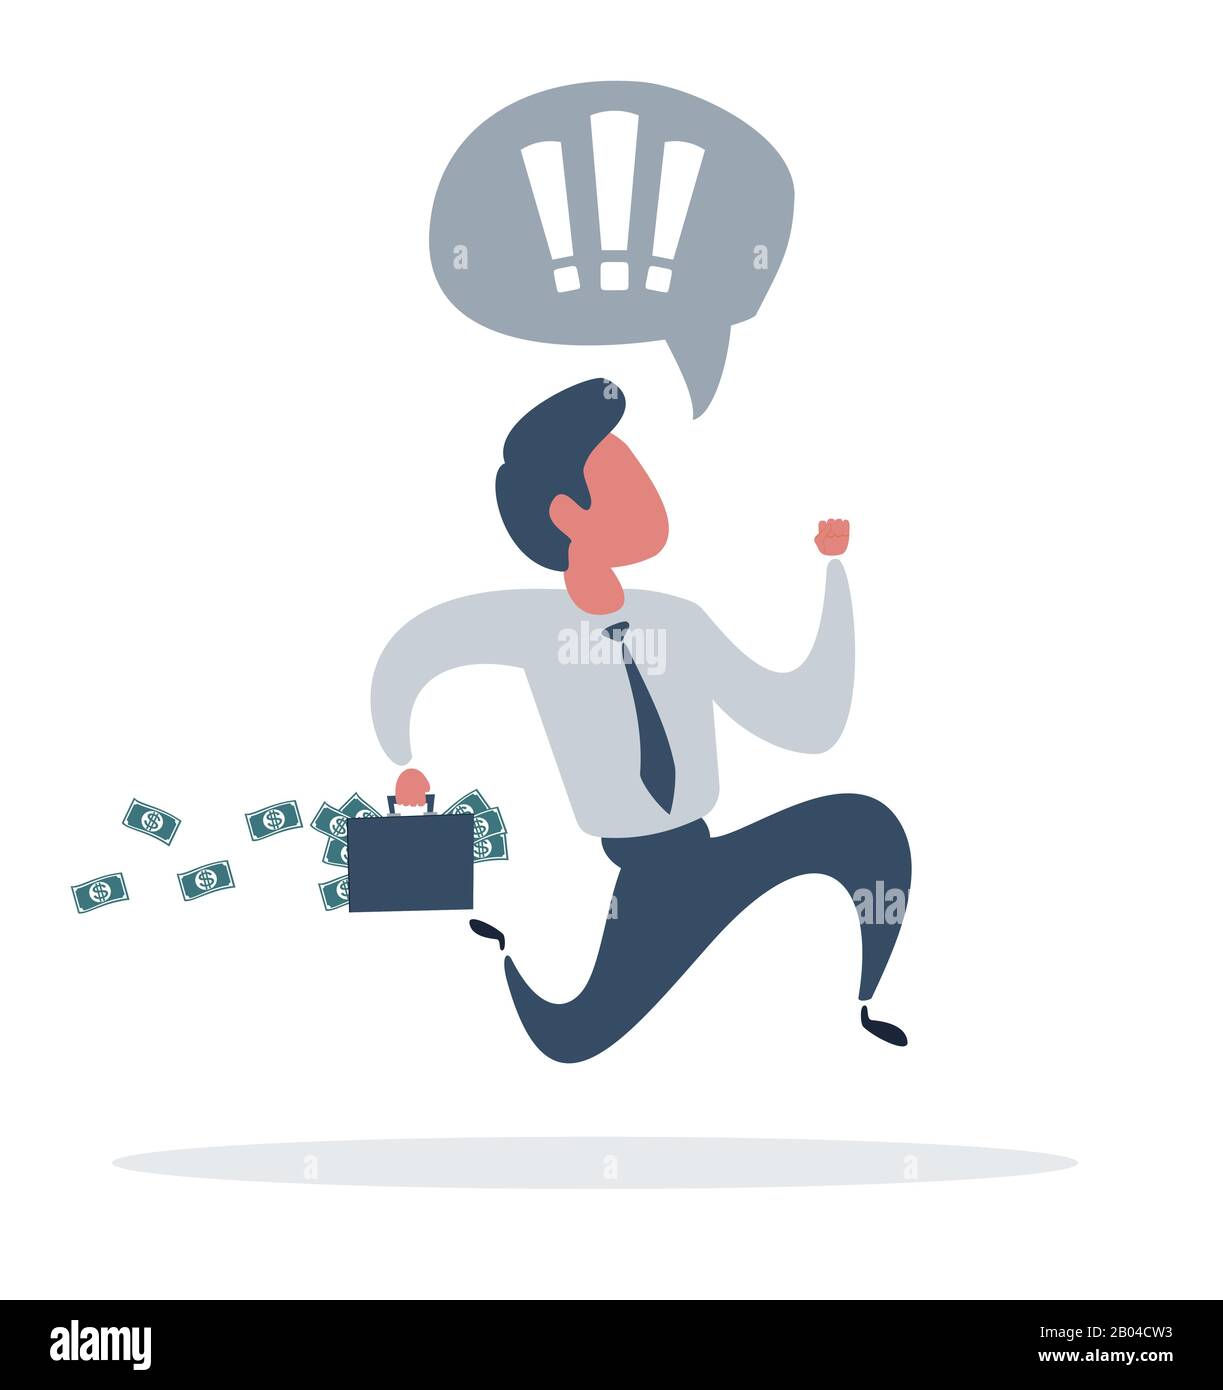 Businessman is running. Business concept illustration. Stock Vector